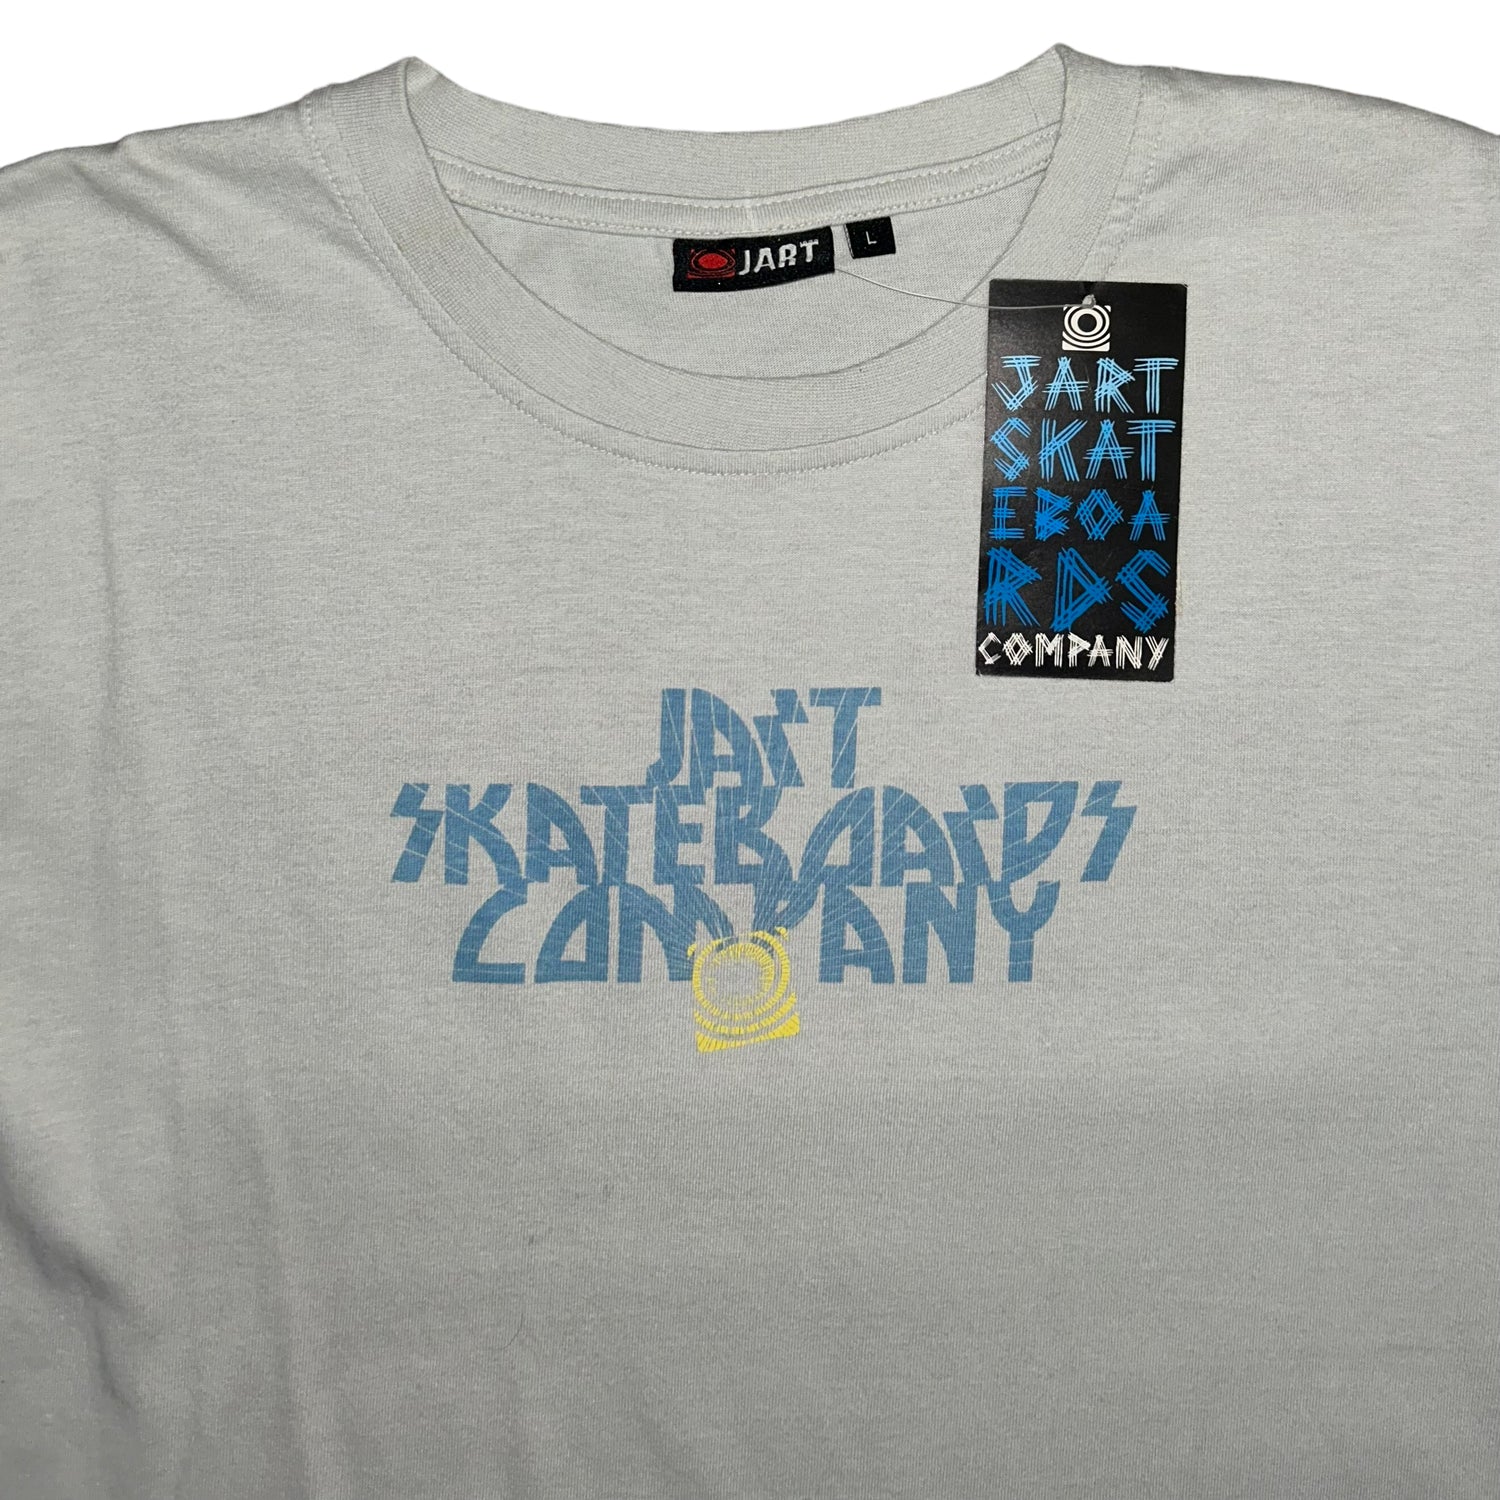 T-shirt Jard Skateboards Company (L)